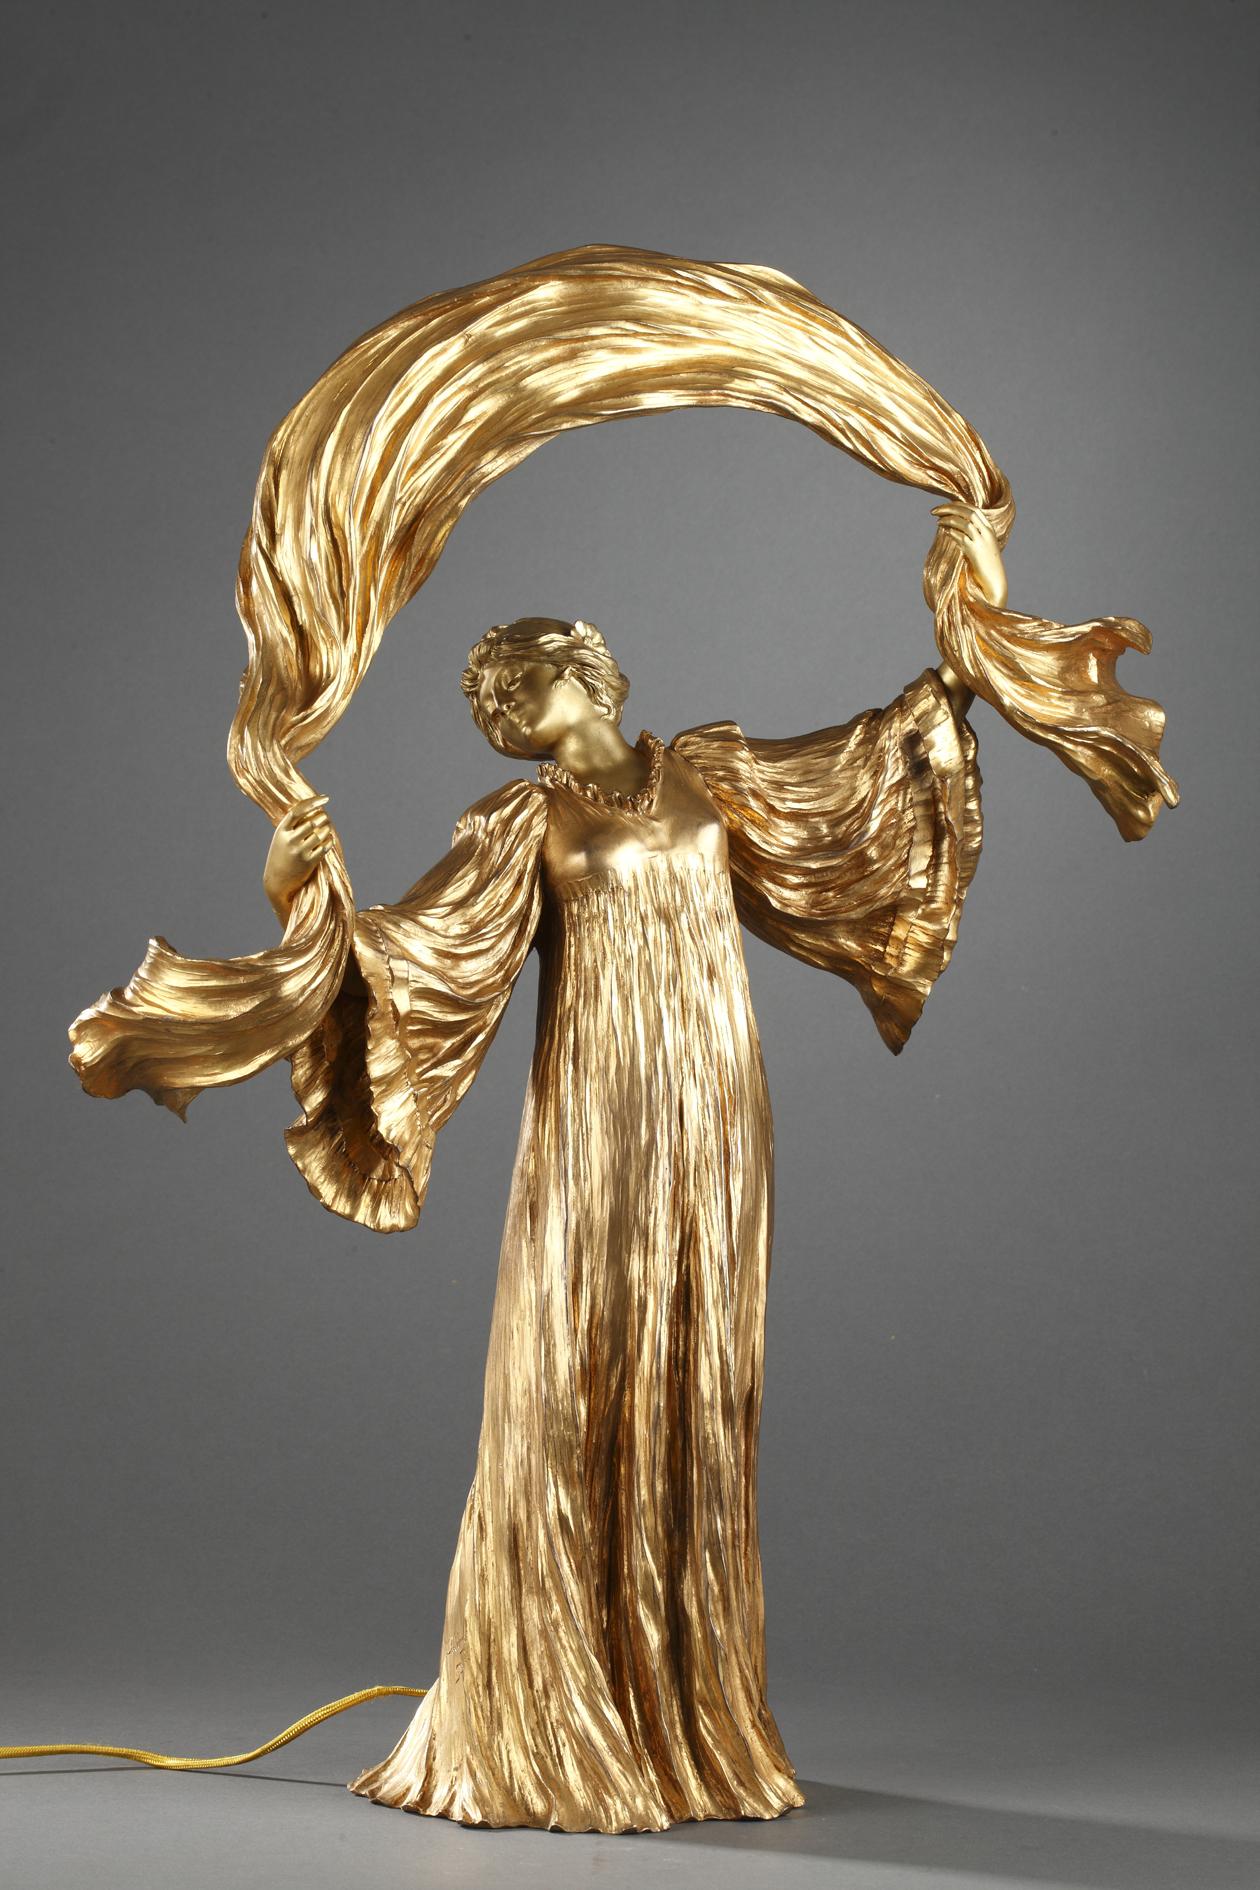 Agathon Léonard Figurative Sculpture - "Dancer with the scarf" lamp